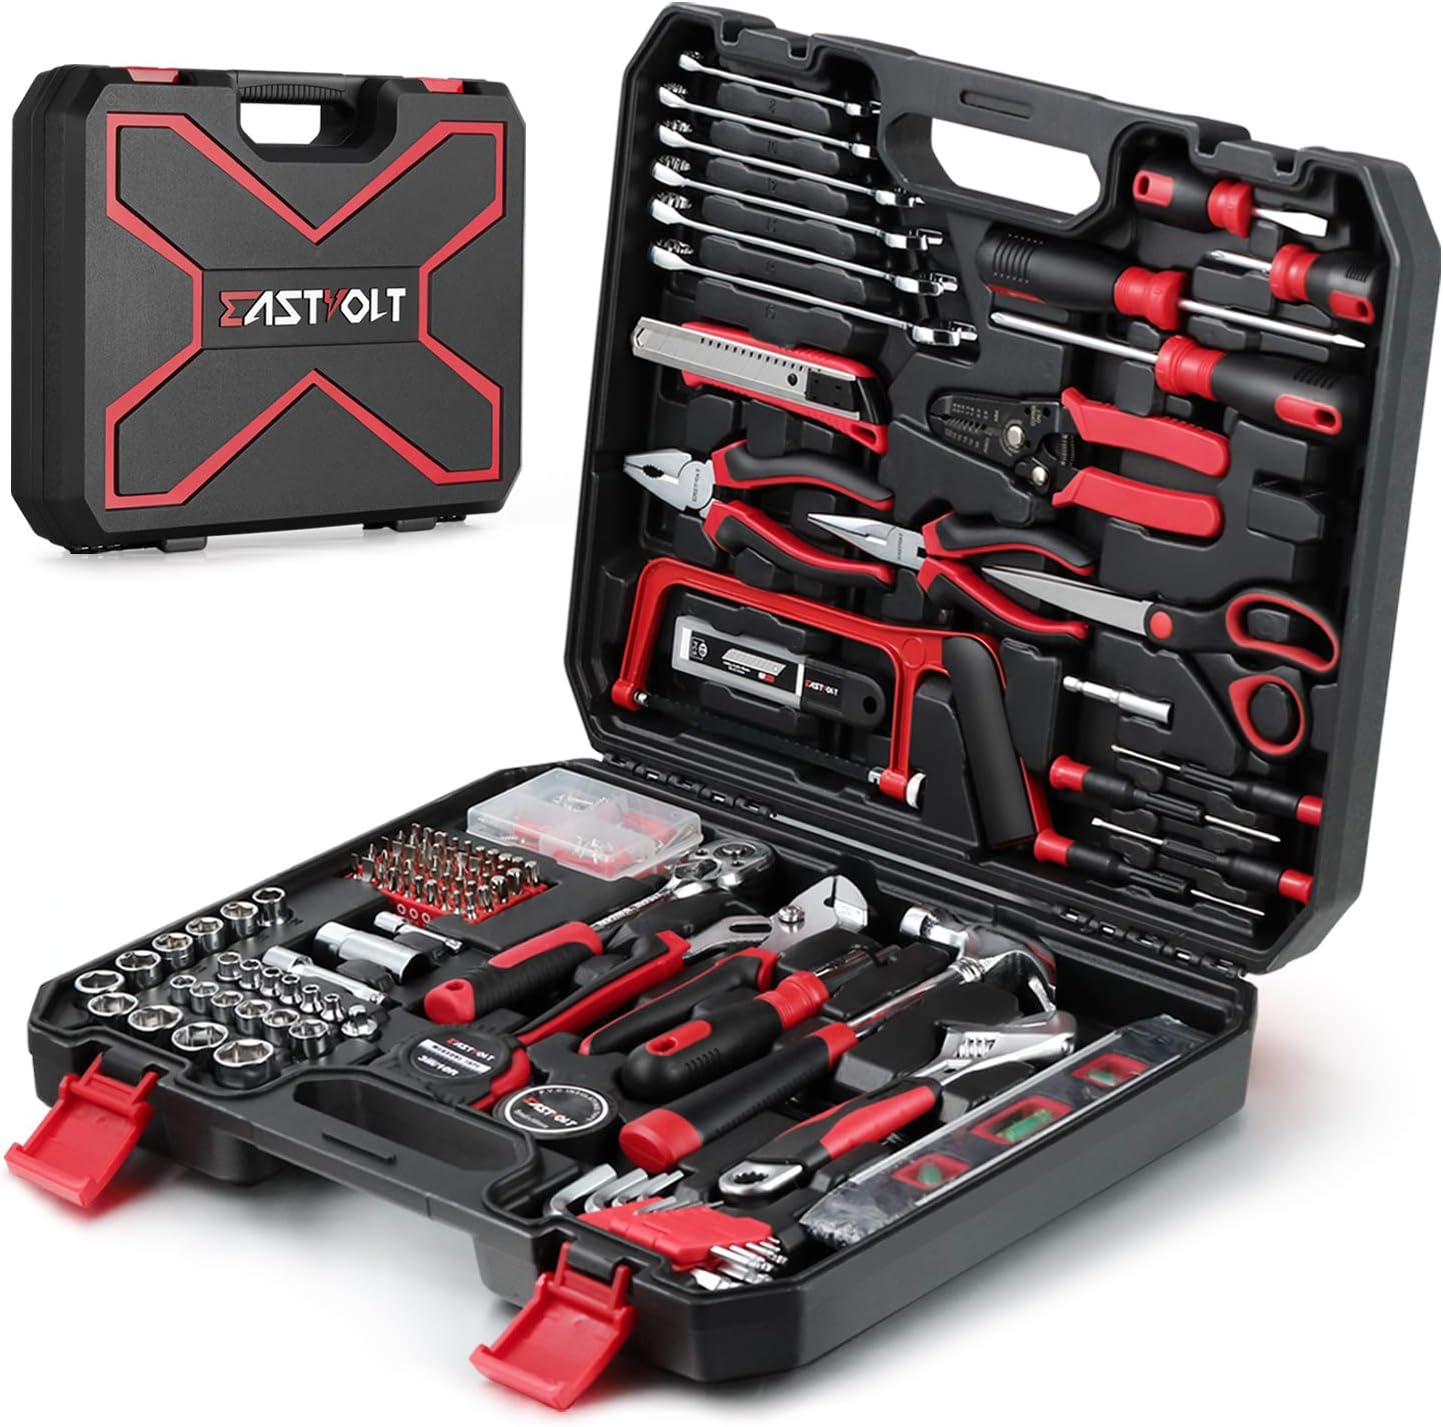 Eastvolt 218-Piece Household Tool Kit, Auto Repair [...]